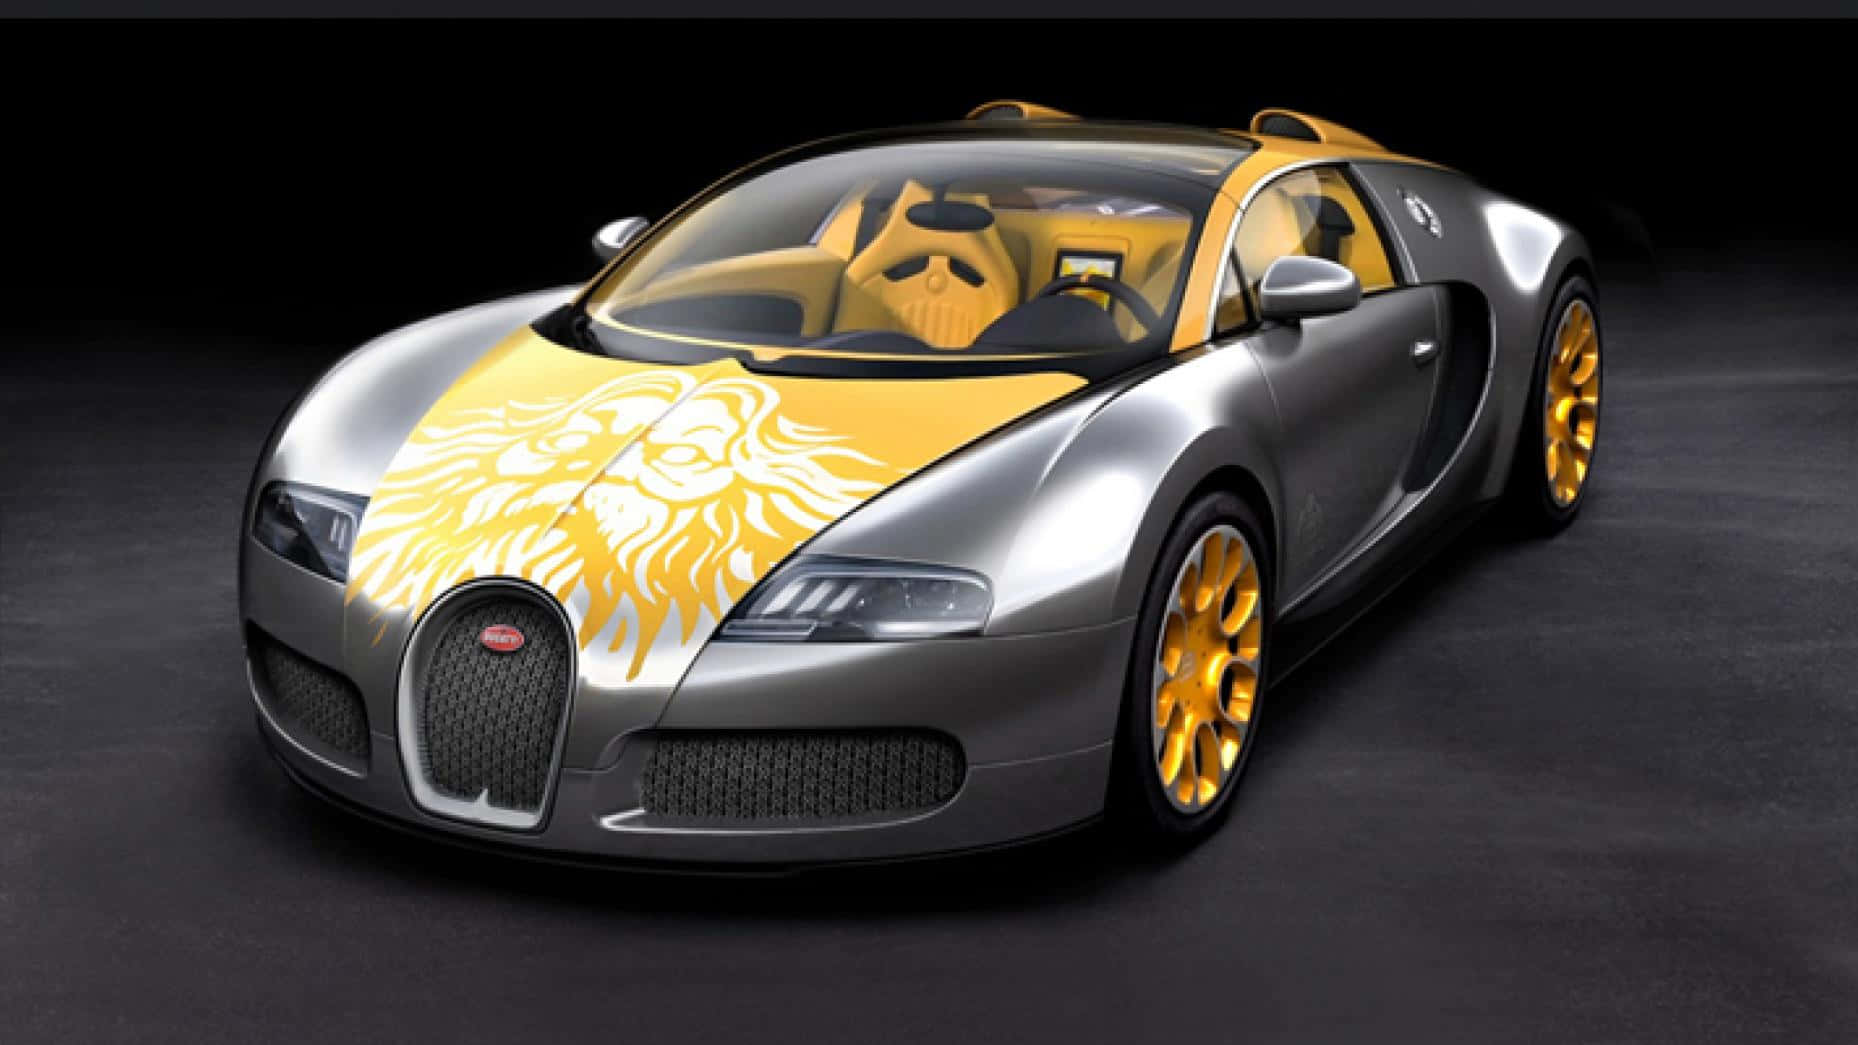 Download Gold Bugatti Veyron Car Wallpaper 